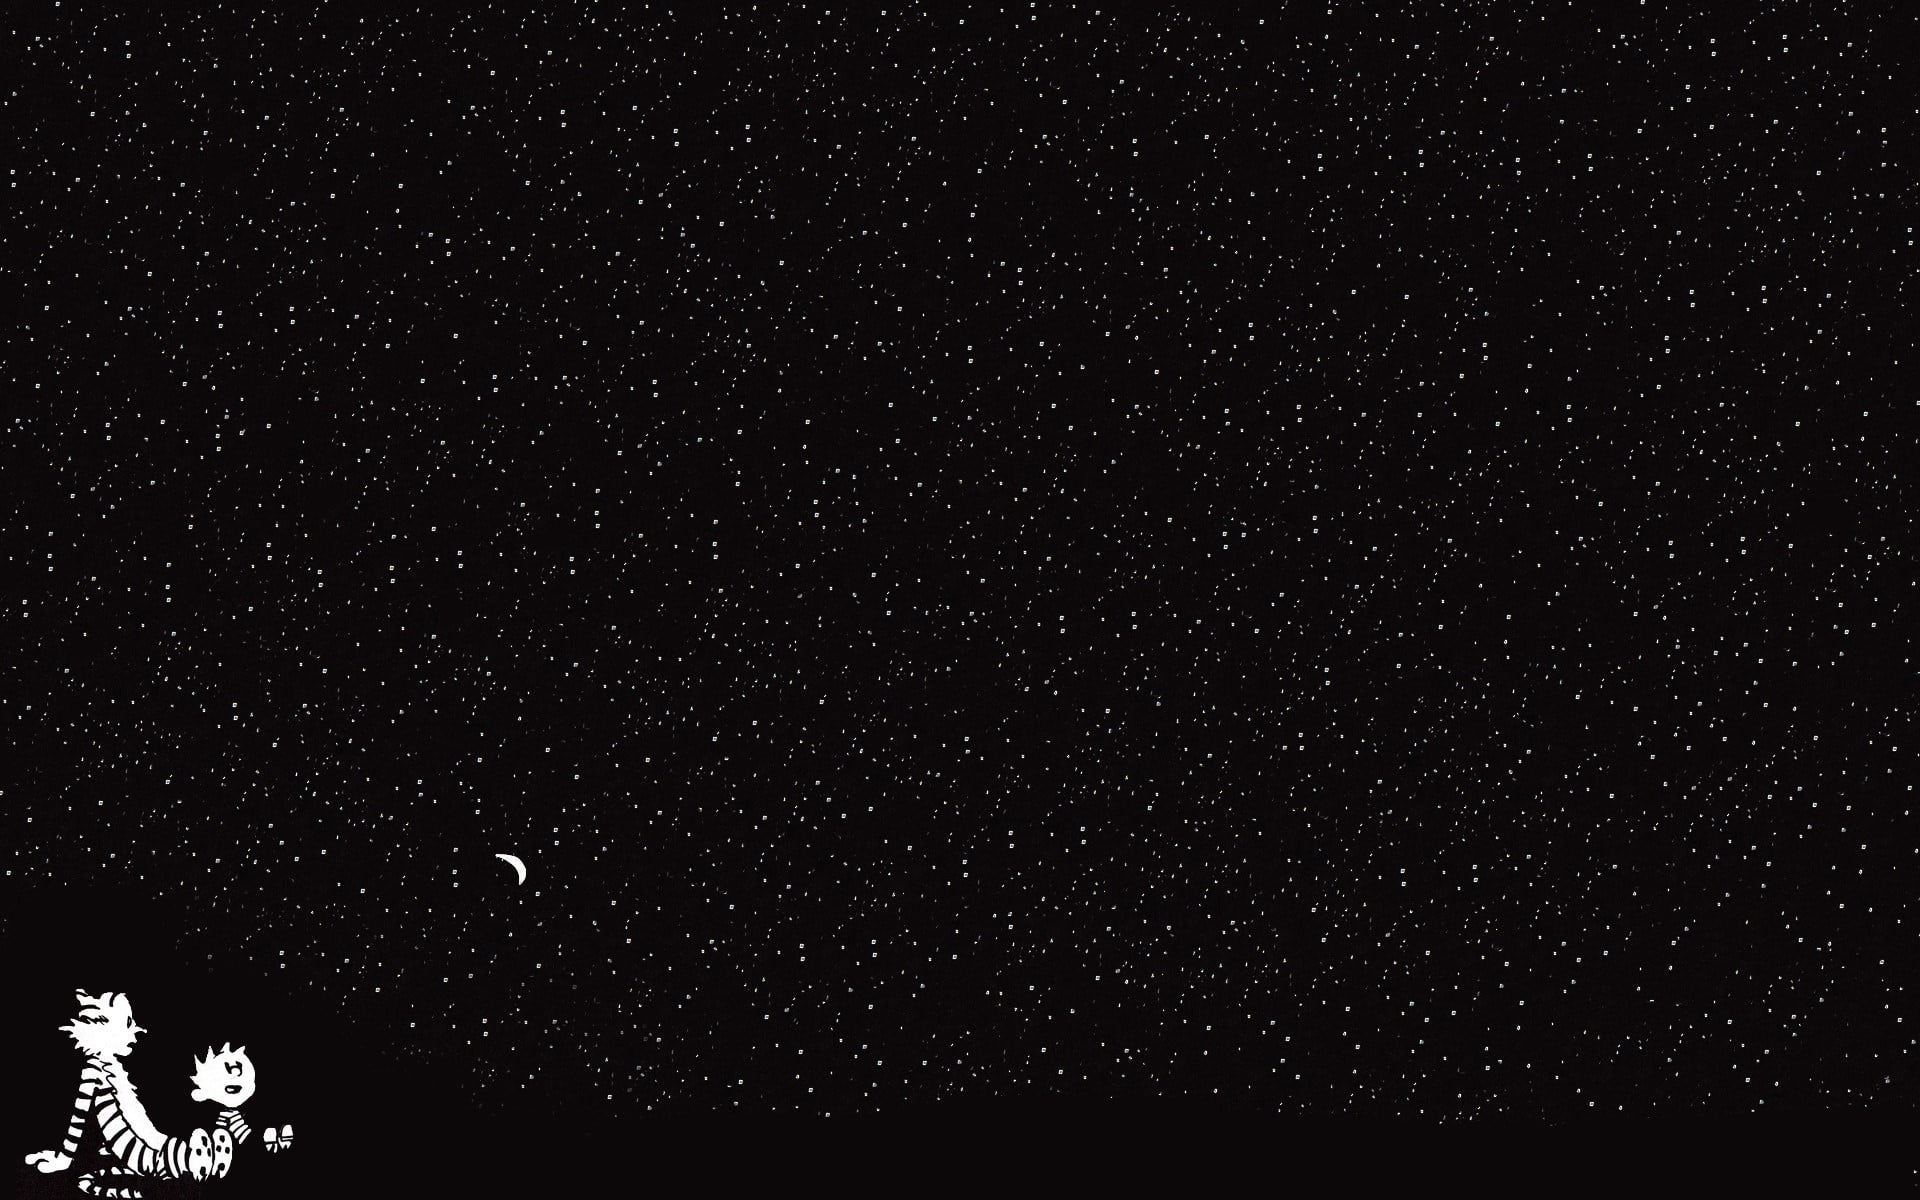 Calvin and hobbes, Starry sky, Cartoon, night, star - space